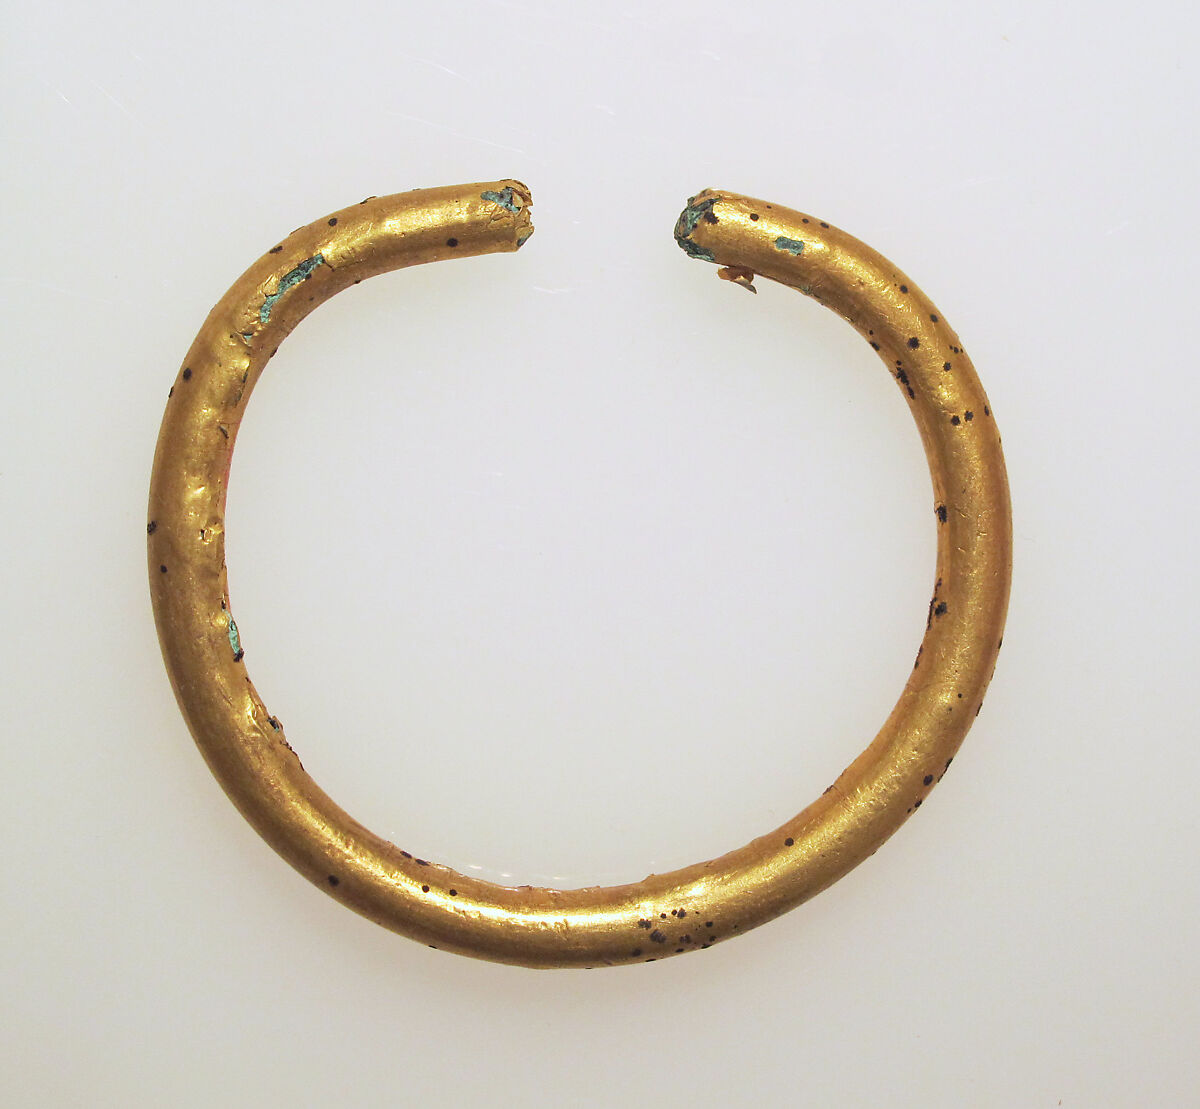 Bracelet, gilded bronze, Gold, bronze, Cypriot 